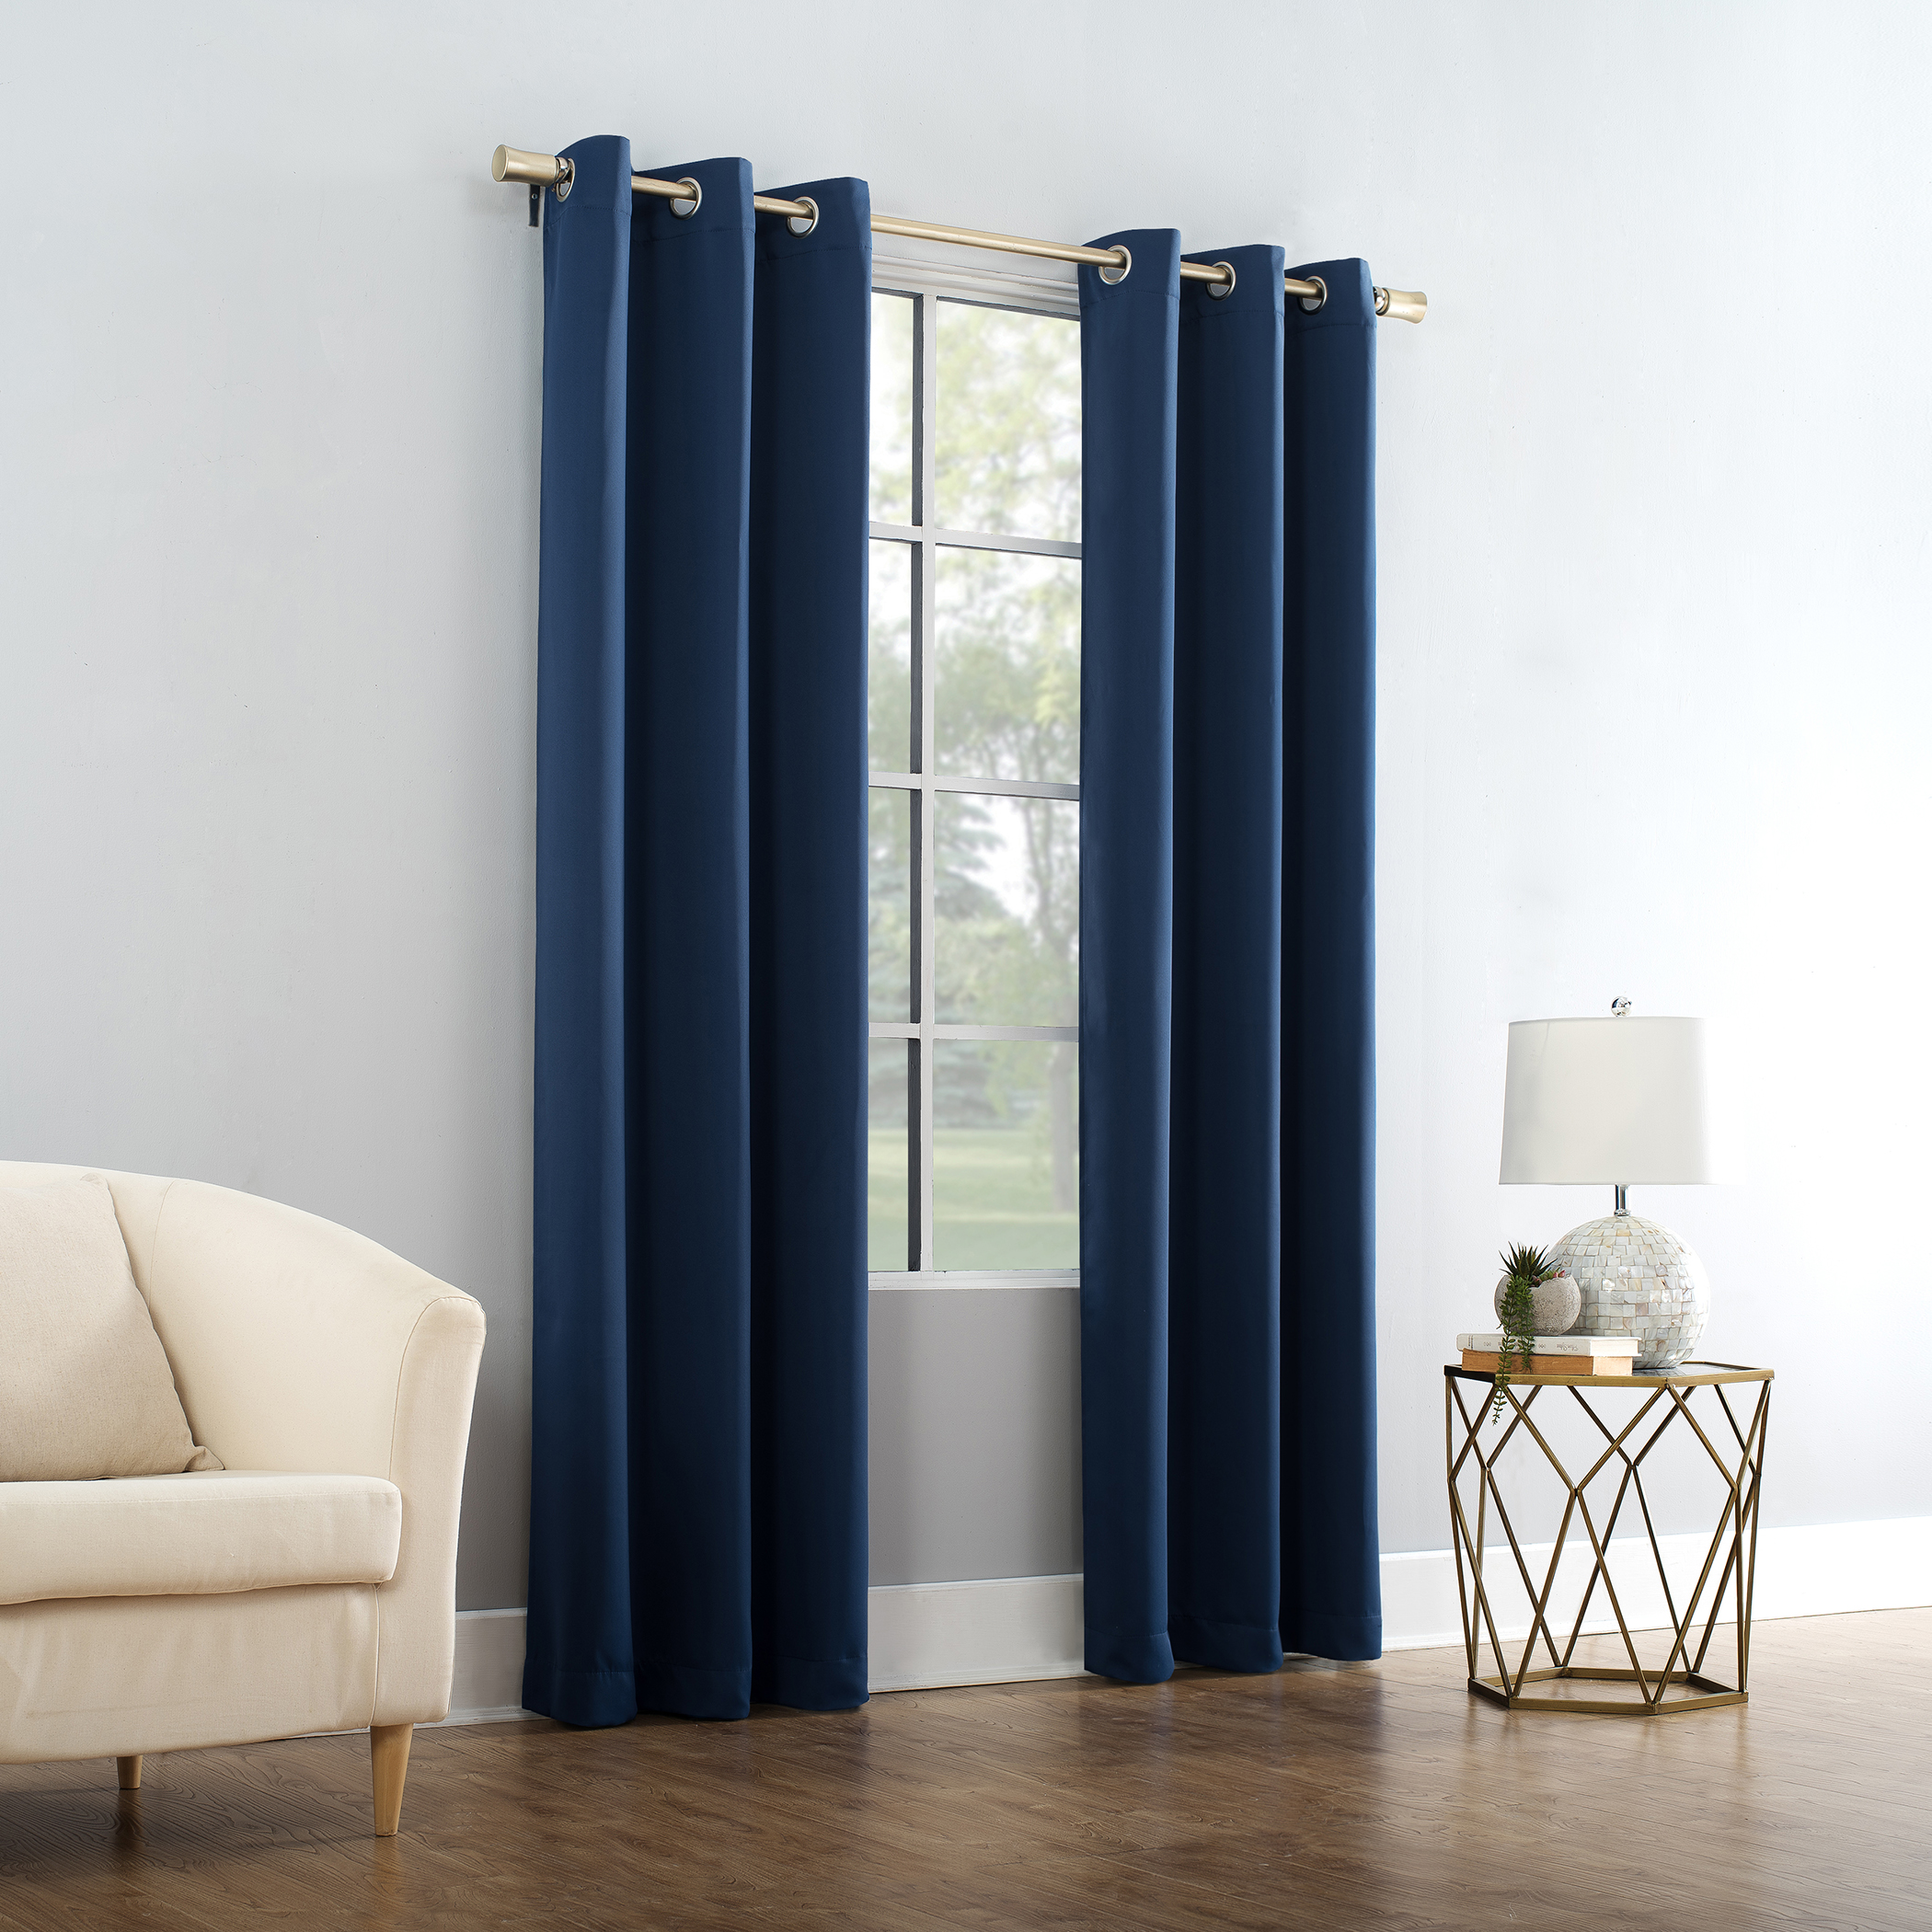 Mainstays Blackout Energy Efficient Grommet Single Curtain Panel, 40"x63", Blue - image 1 of 6